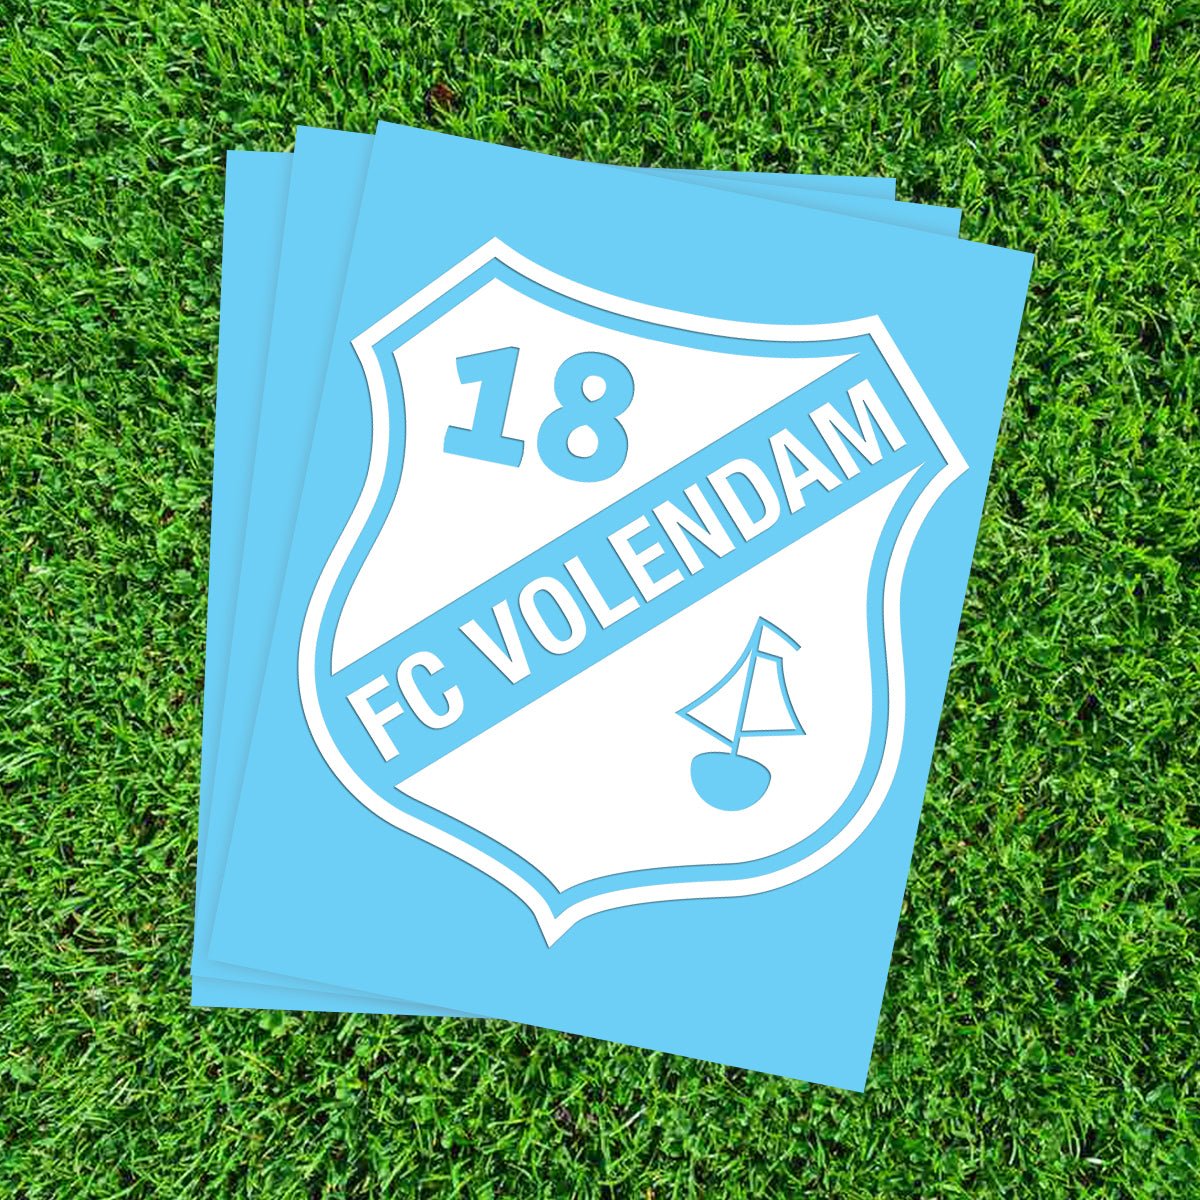 FC Volendam Container Stickers XL - 3 stuks - Kliko stickers - Koning Spandoek FC Volendam Container Stickers XL - 3 stuks - Kliko stickers